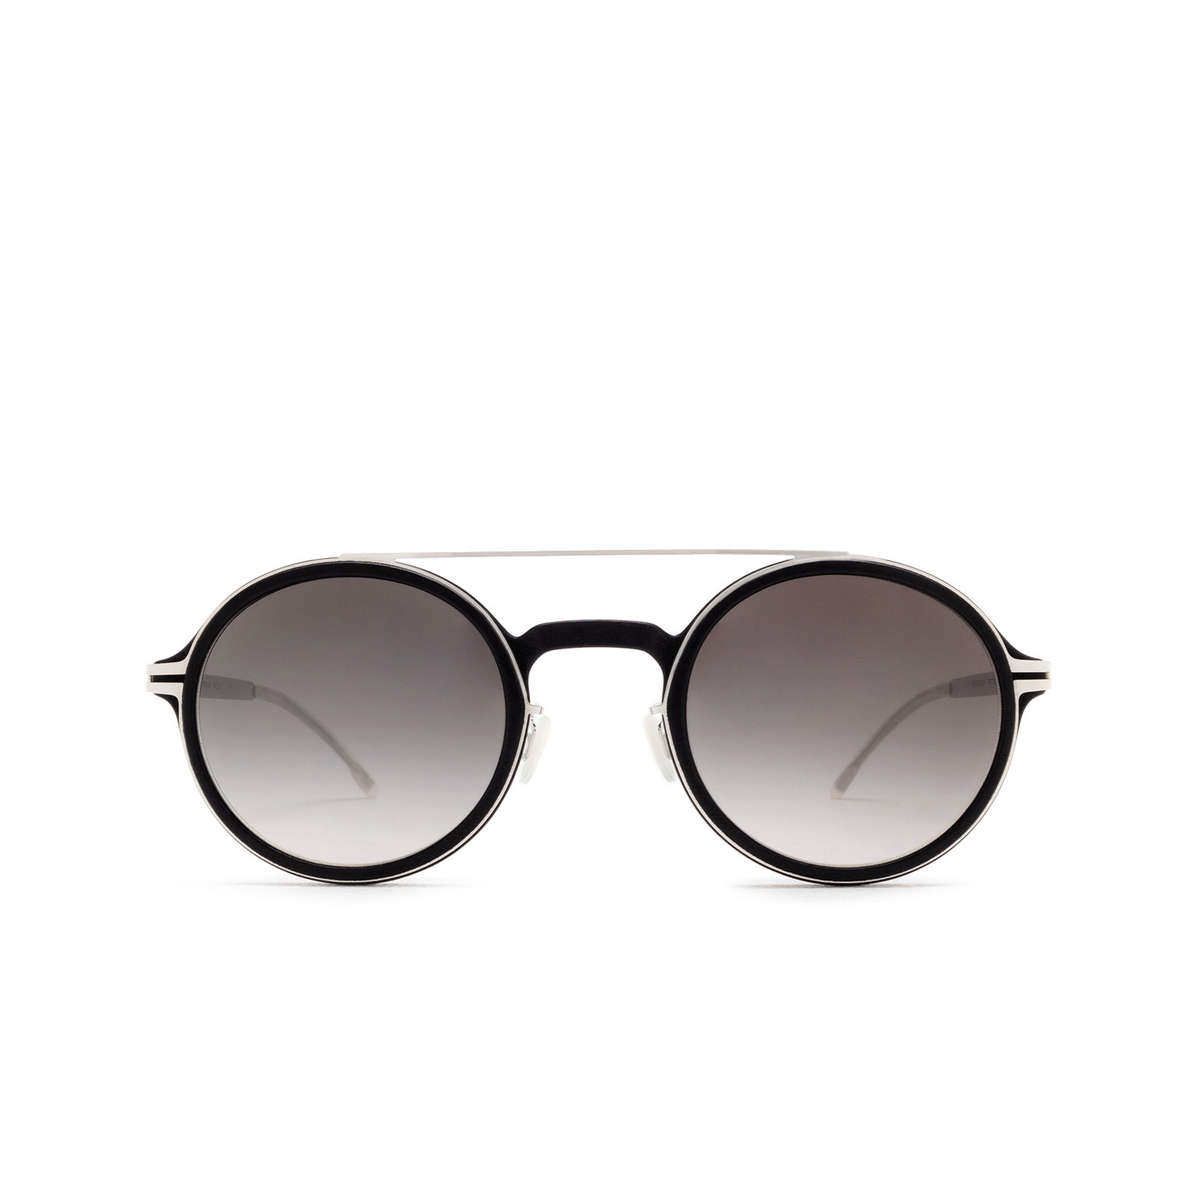 Mykita HEMLOCK SUN Sunglasses 351 Mh22-Pitch Black/Shine Silver - front view